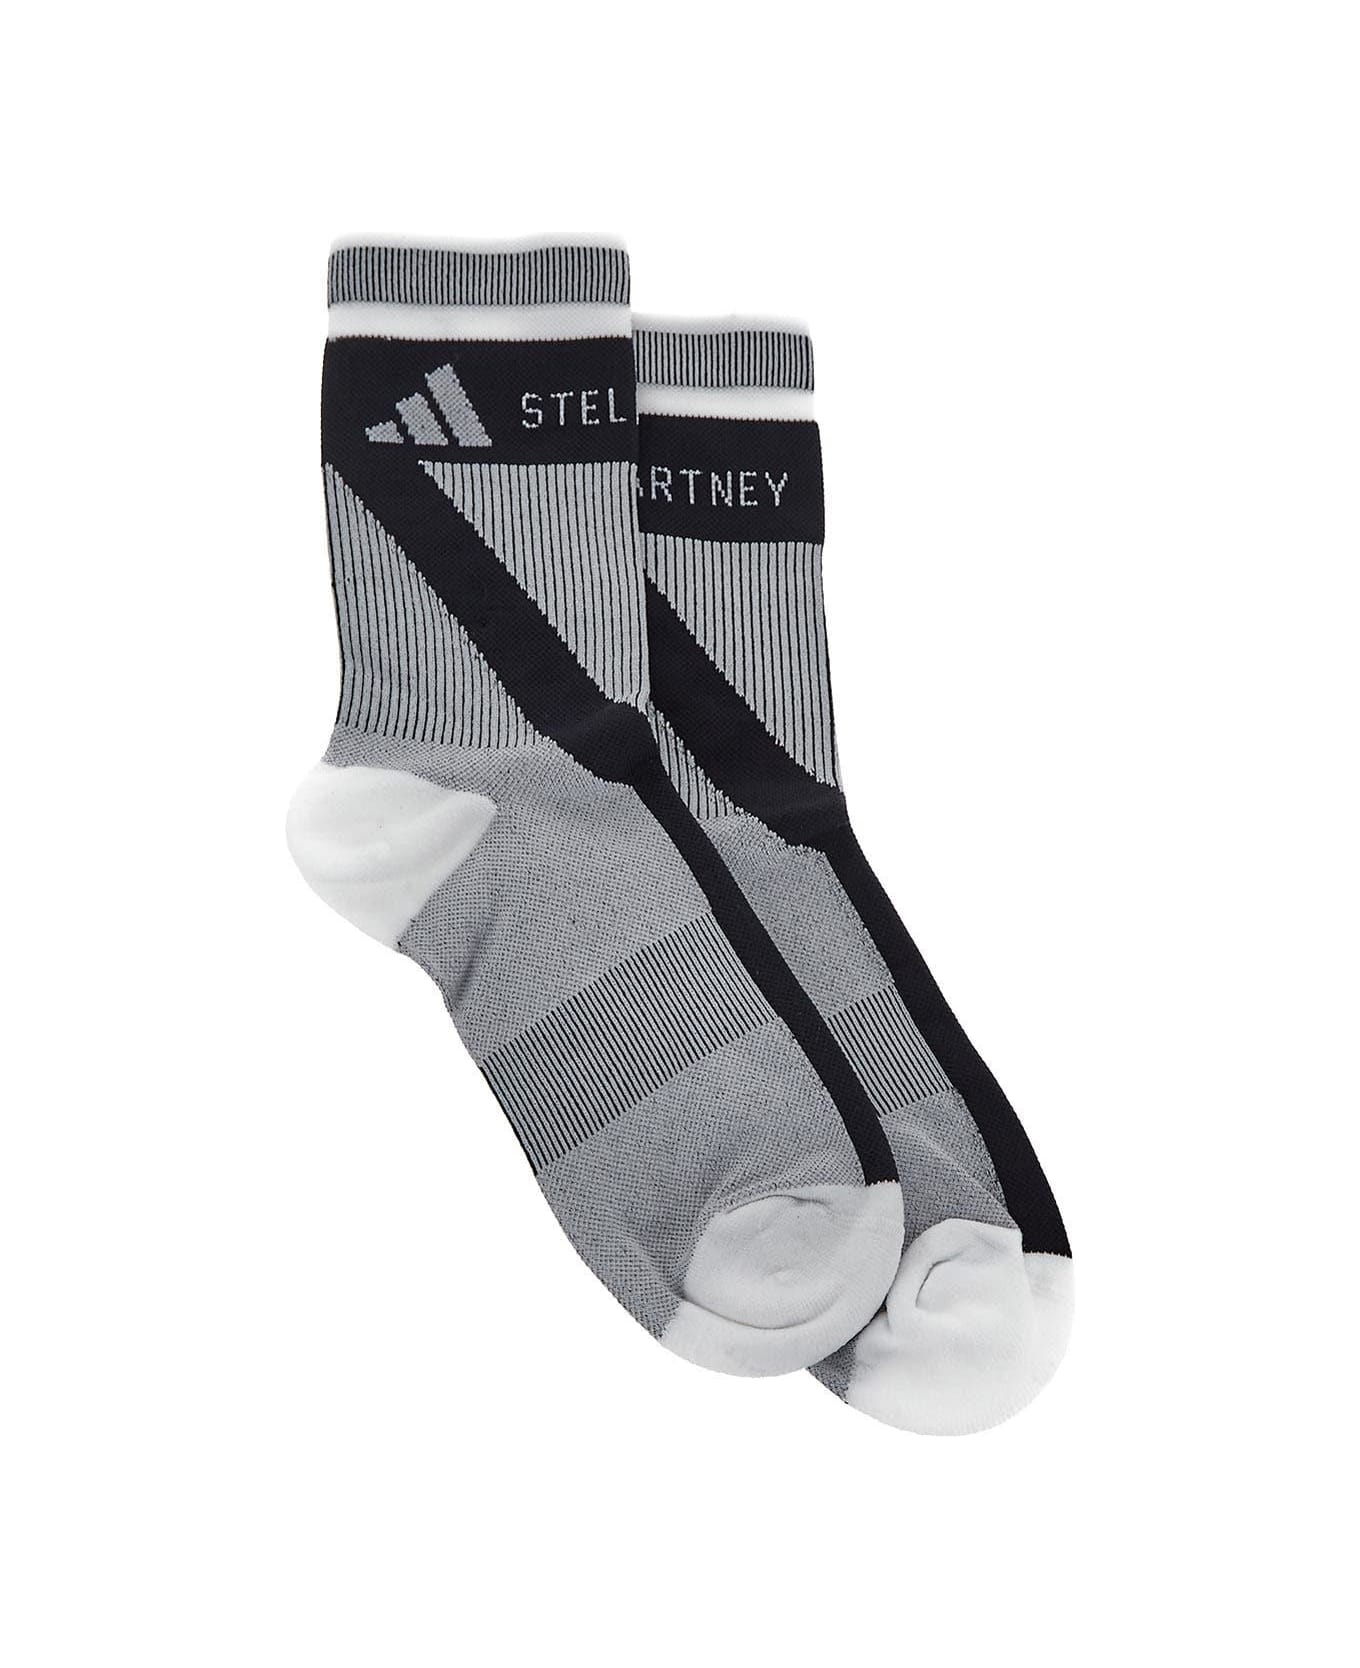 Adidas by Stella McCartney Logo Socks - Black White